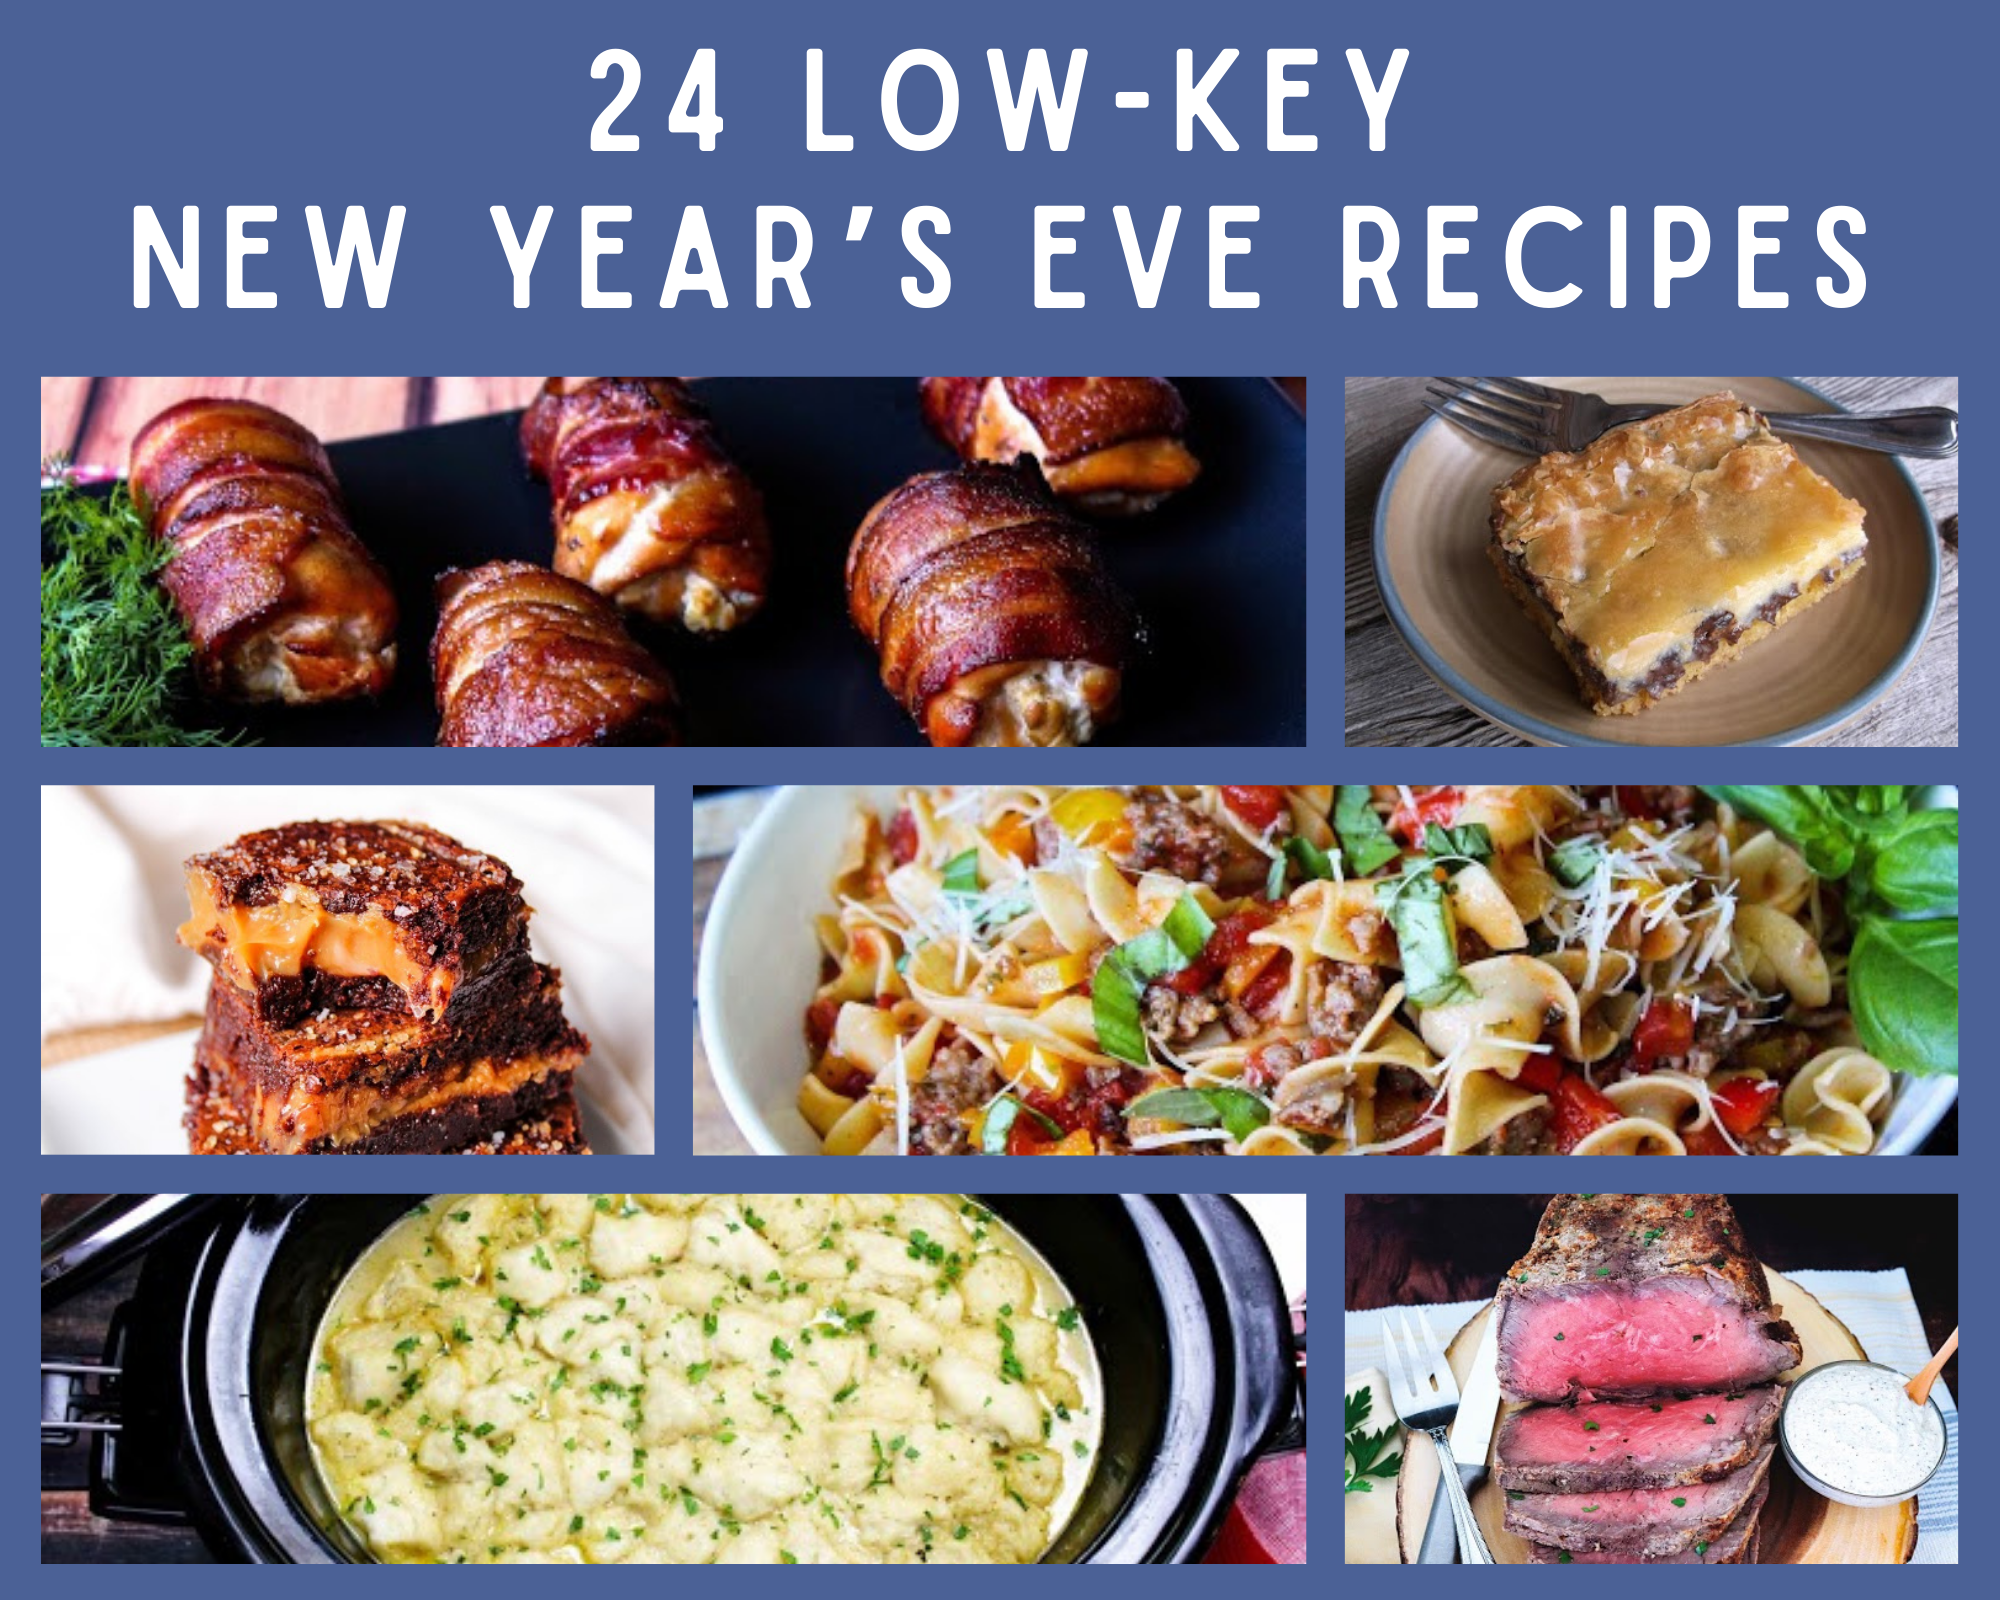 New Year's Eve recipes